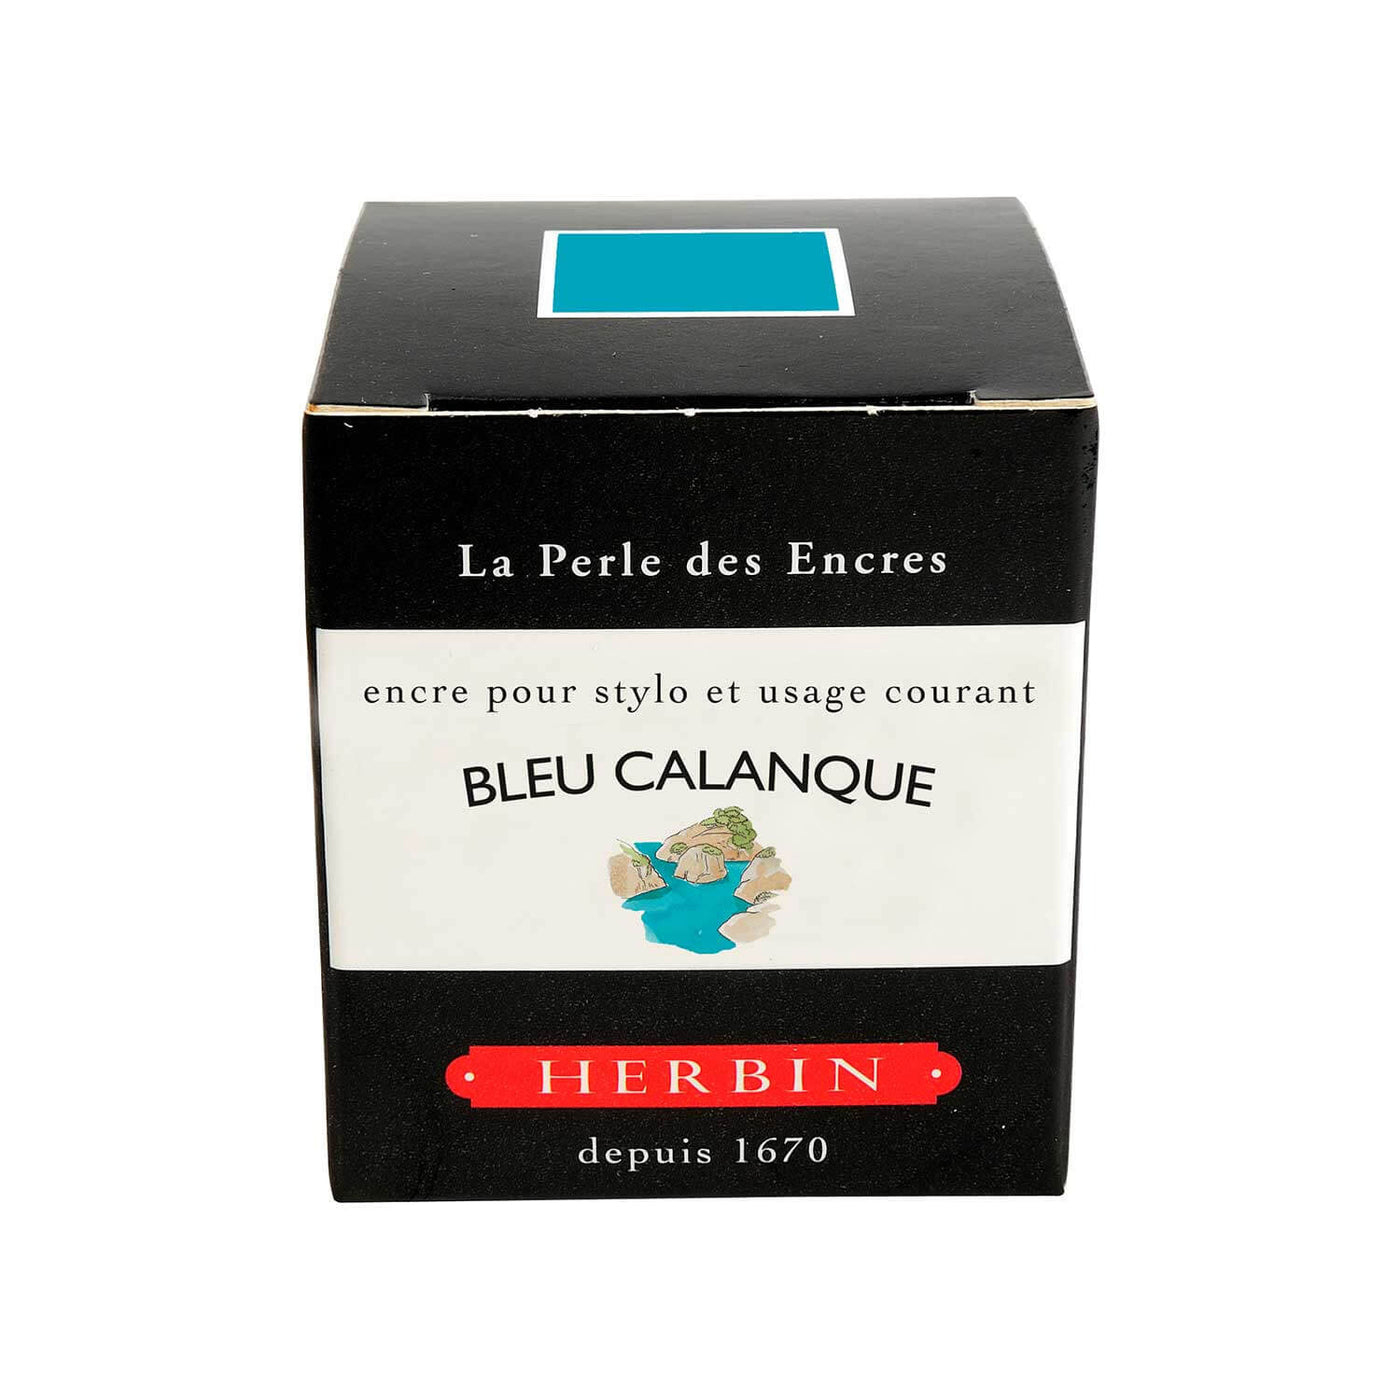 J Herbin "D" Series Ink Bottle Bleu Calanque (Turquoise) - 30ml 2